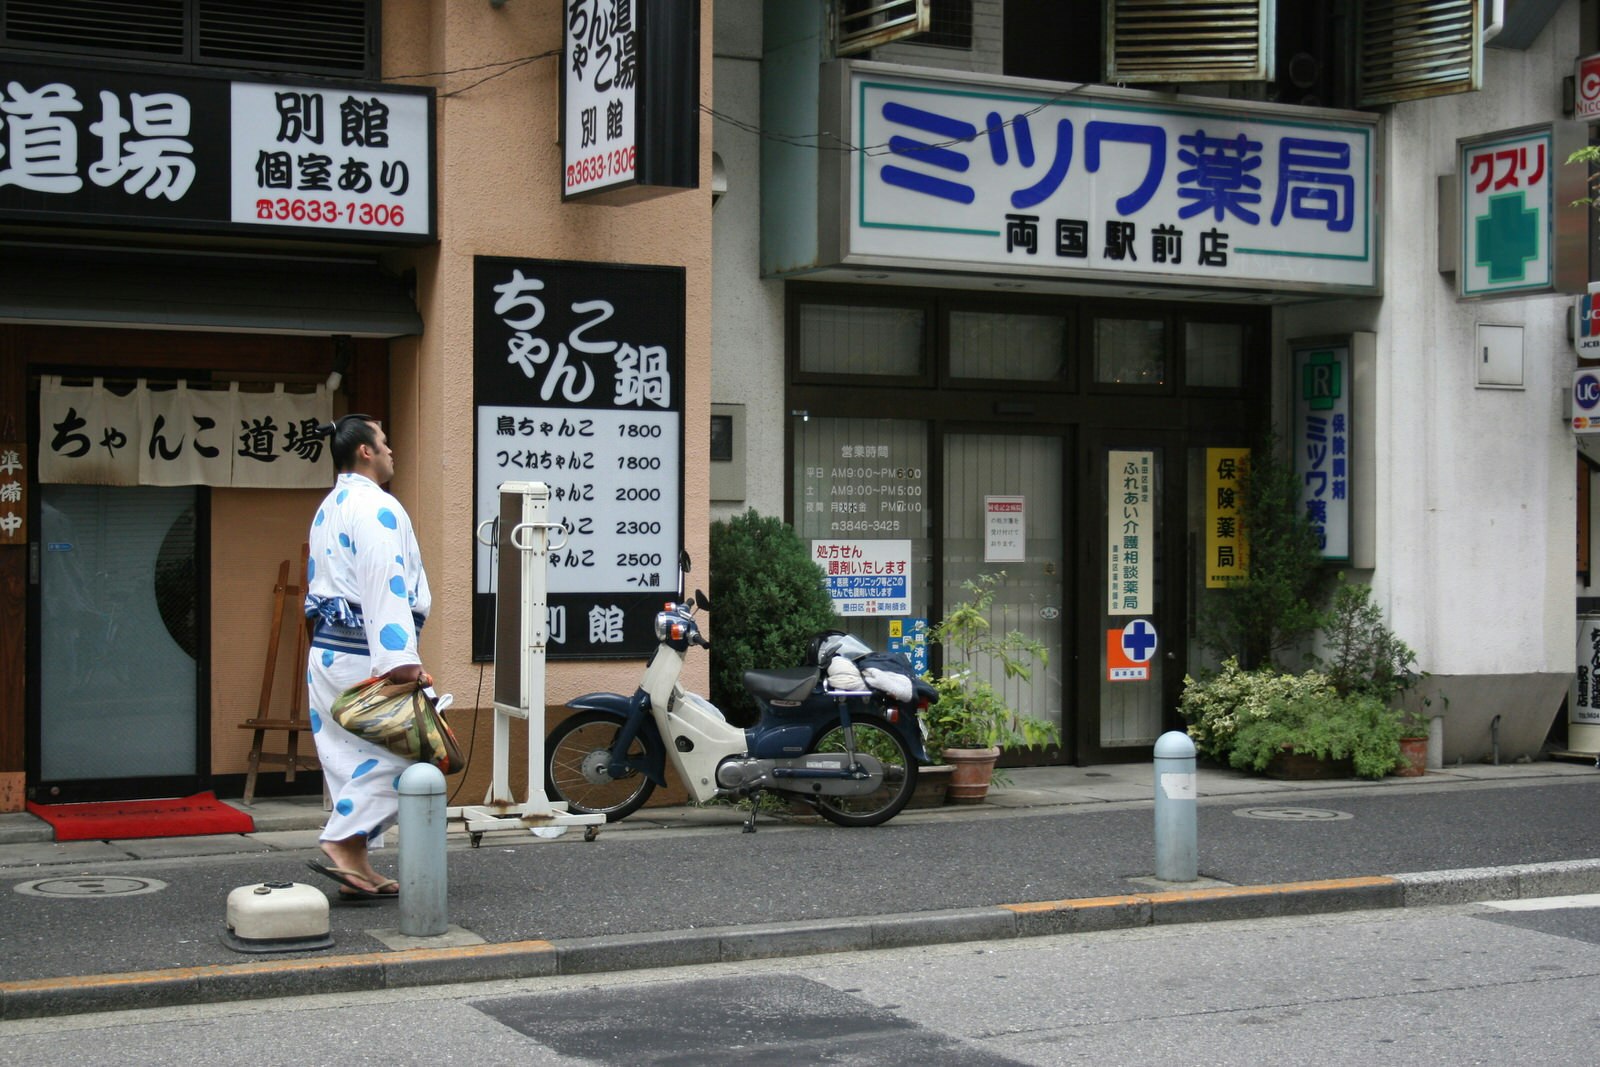 A sumo wrestler dressed in cotton kimono walks past a chanko nabe restaurant on a Tokyo street